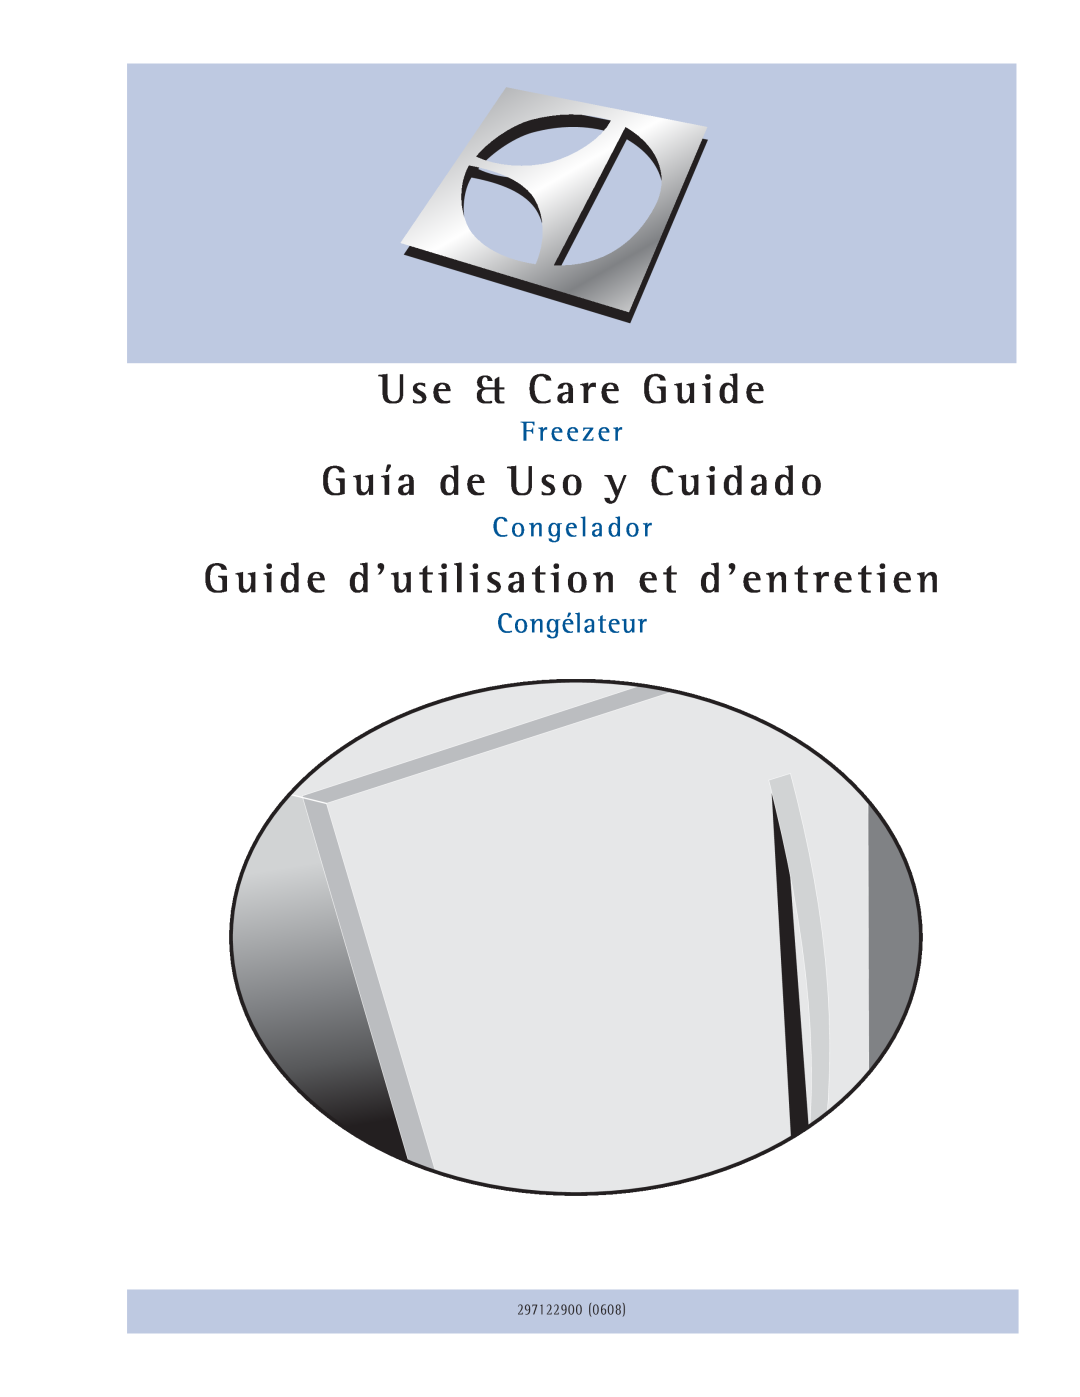 Electrolux Refrigerator manual F r e e z e r, C o n g e l a d o r, Congélateur, Use & Care Guide, Guía de Uso y Cuidado 